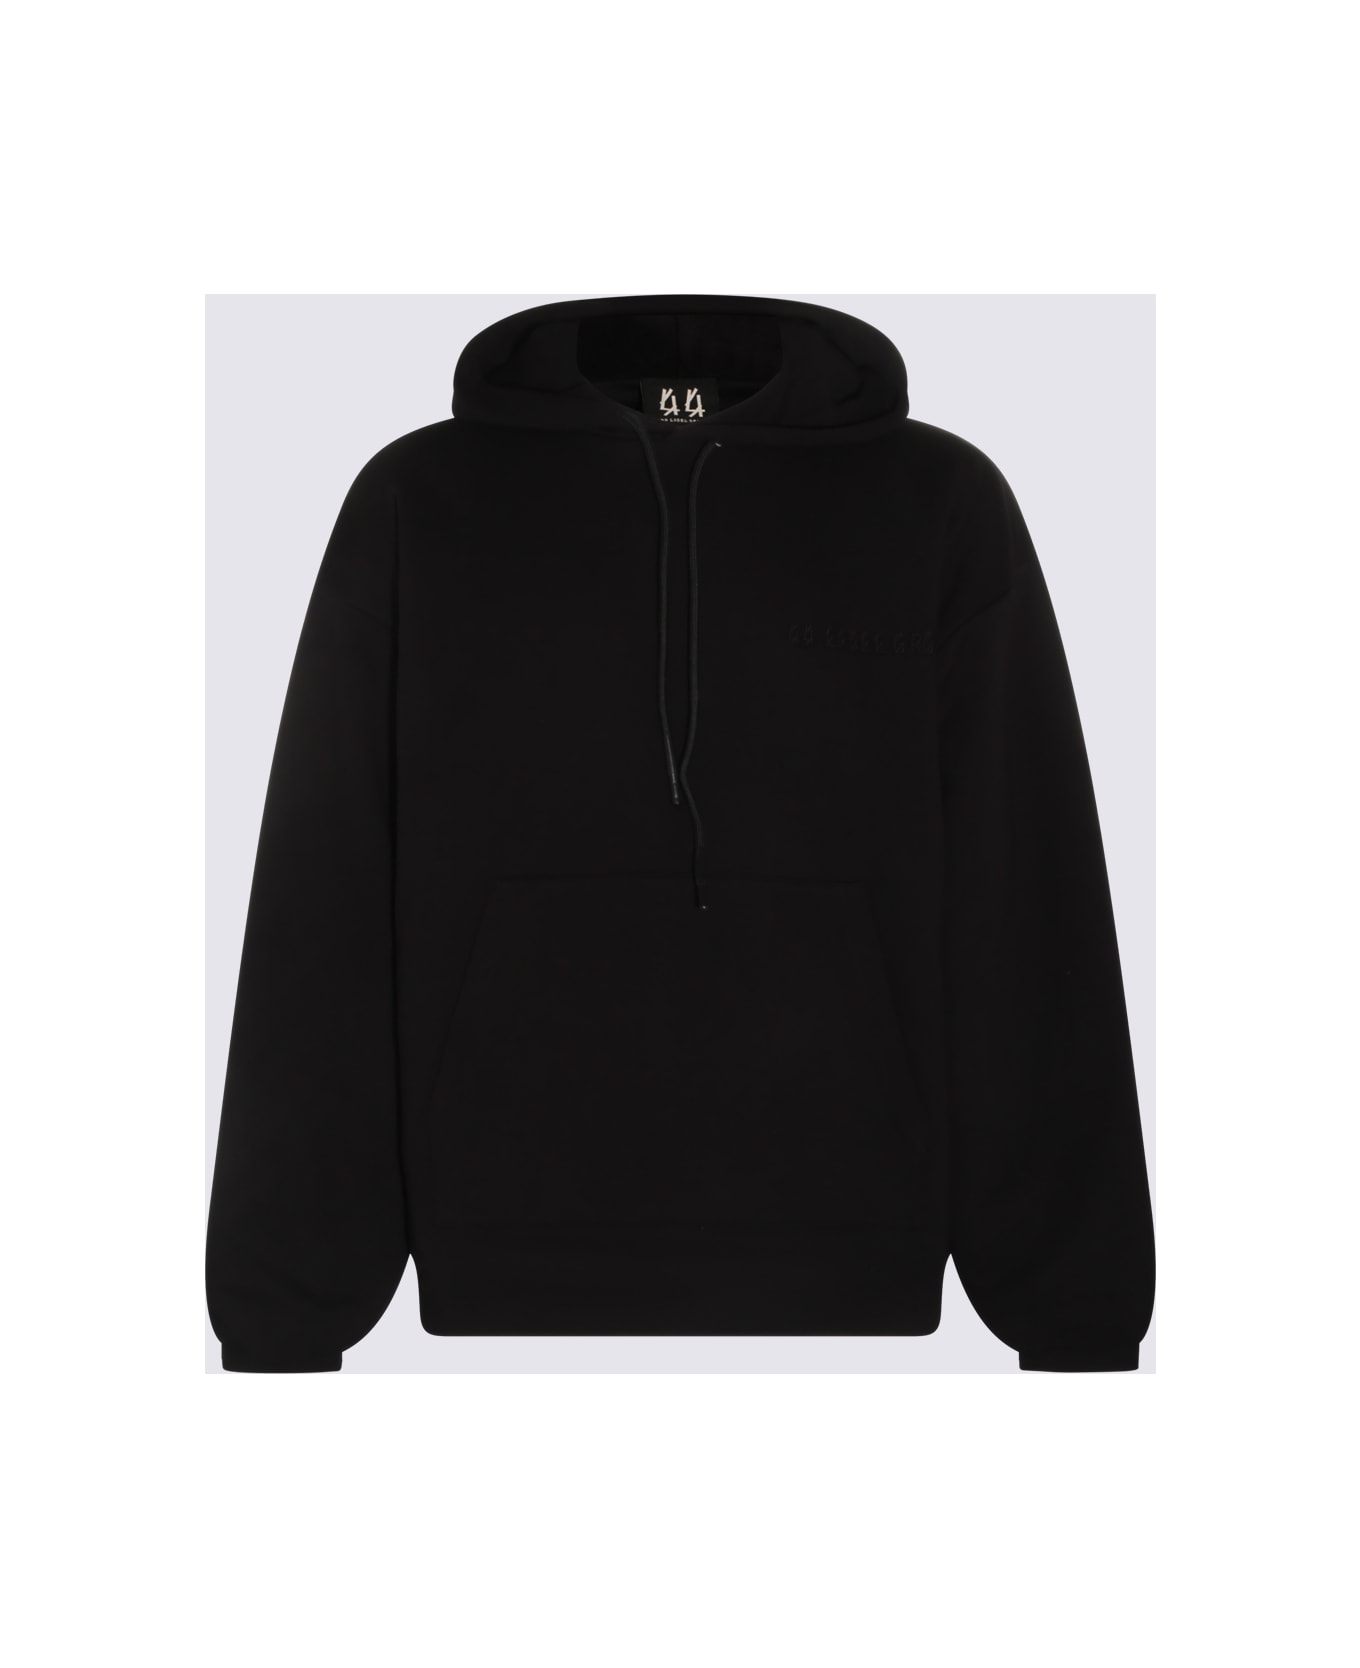 44 Label Group Black Cotton Sweatshirt - Black フリース